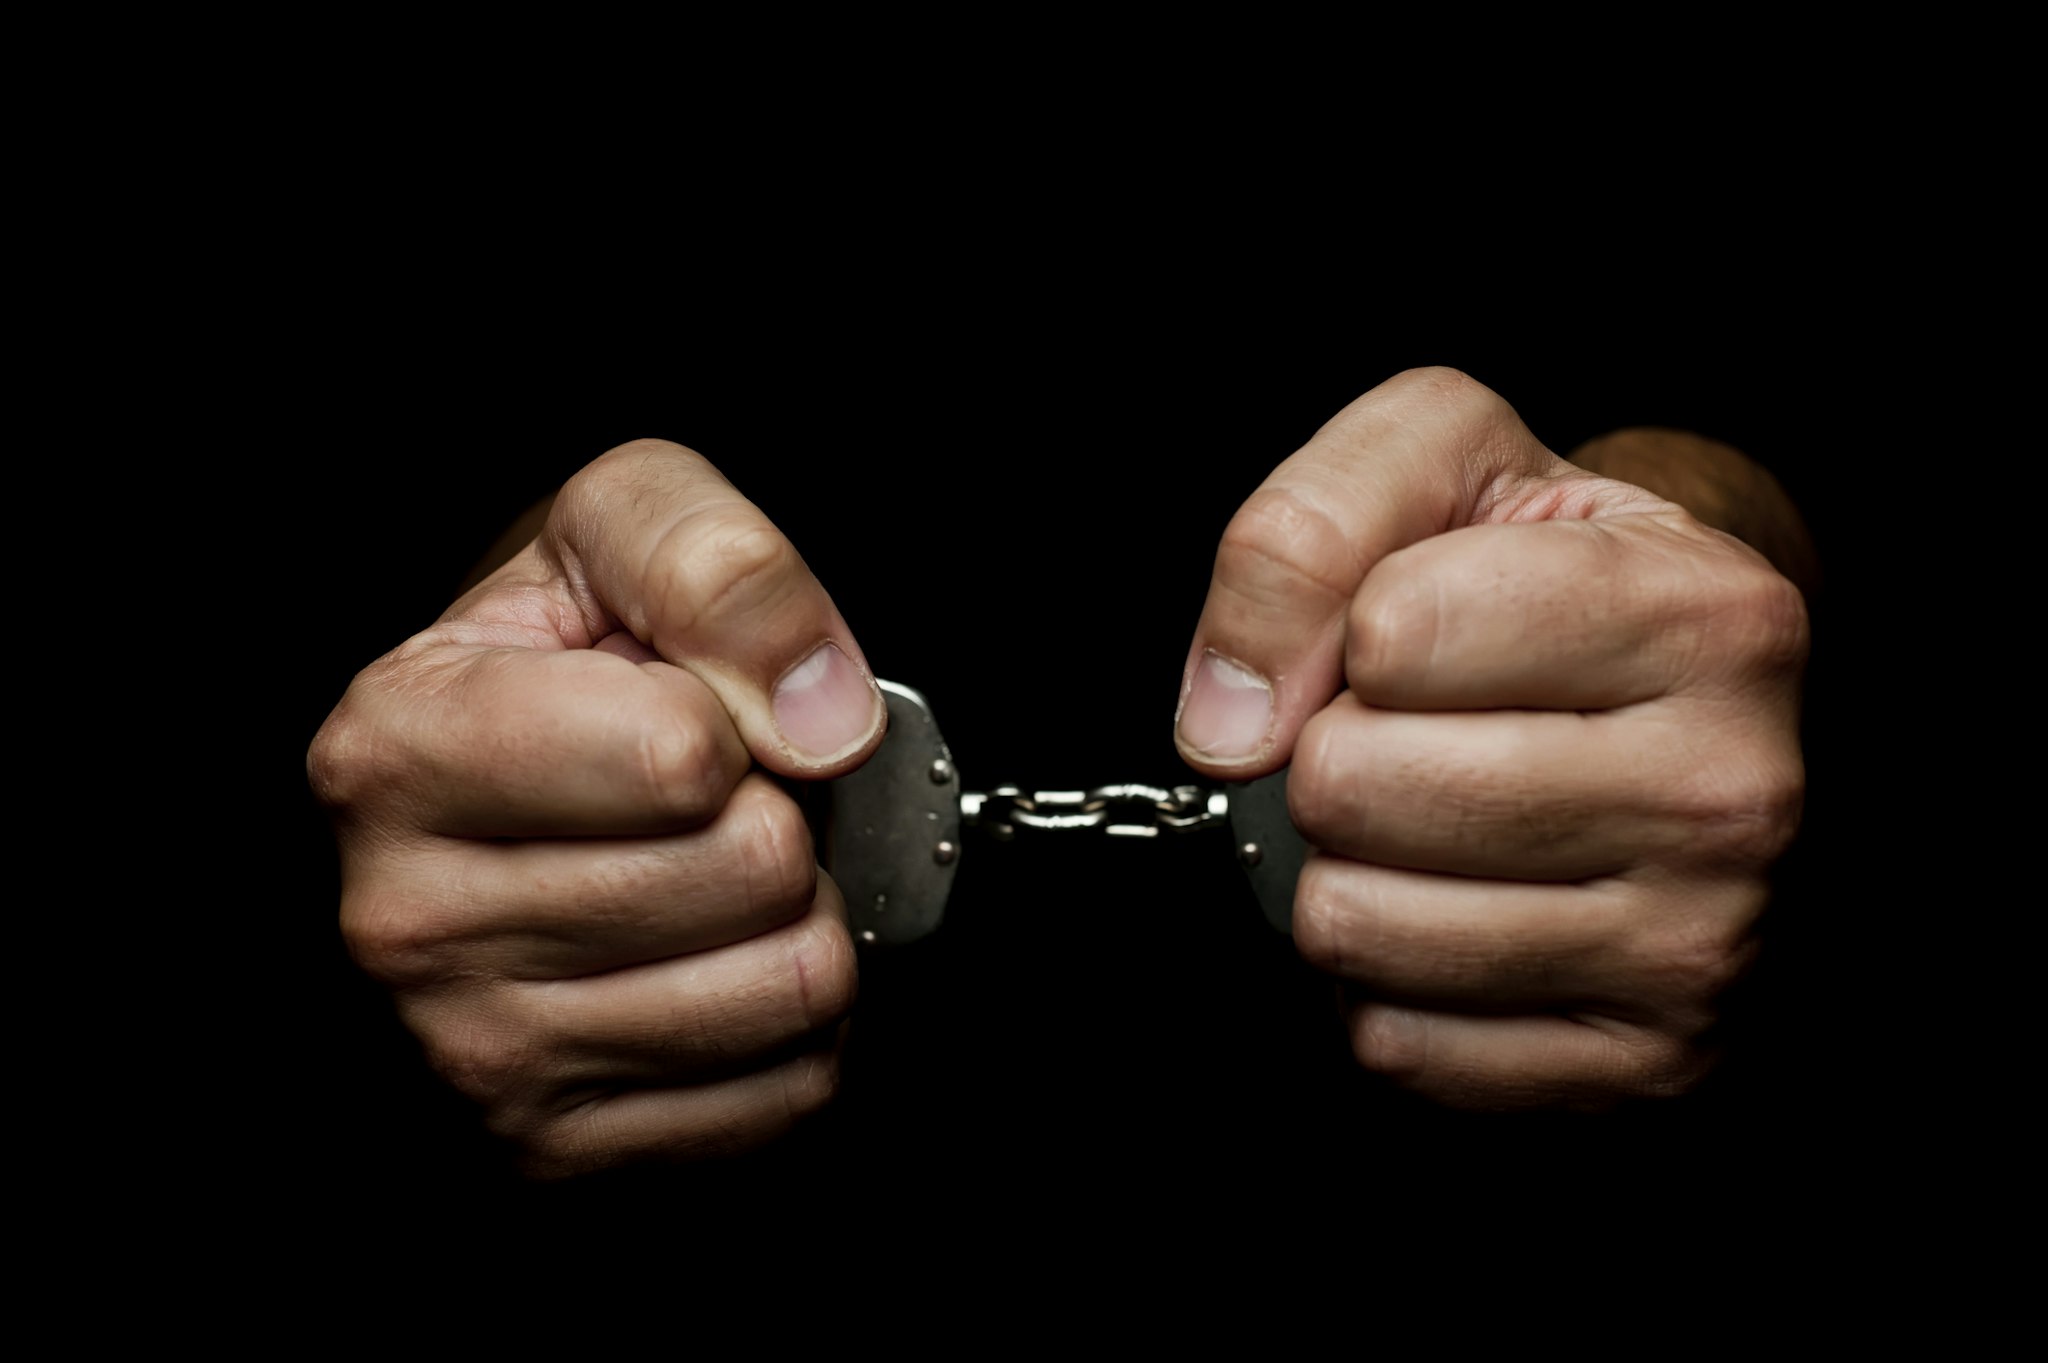 Handcuffs - stock photo